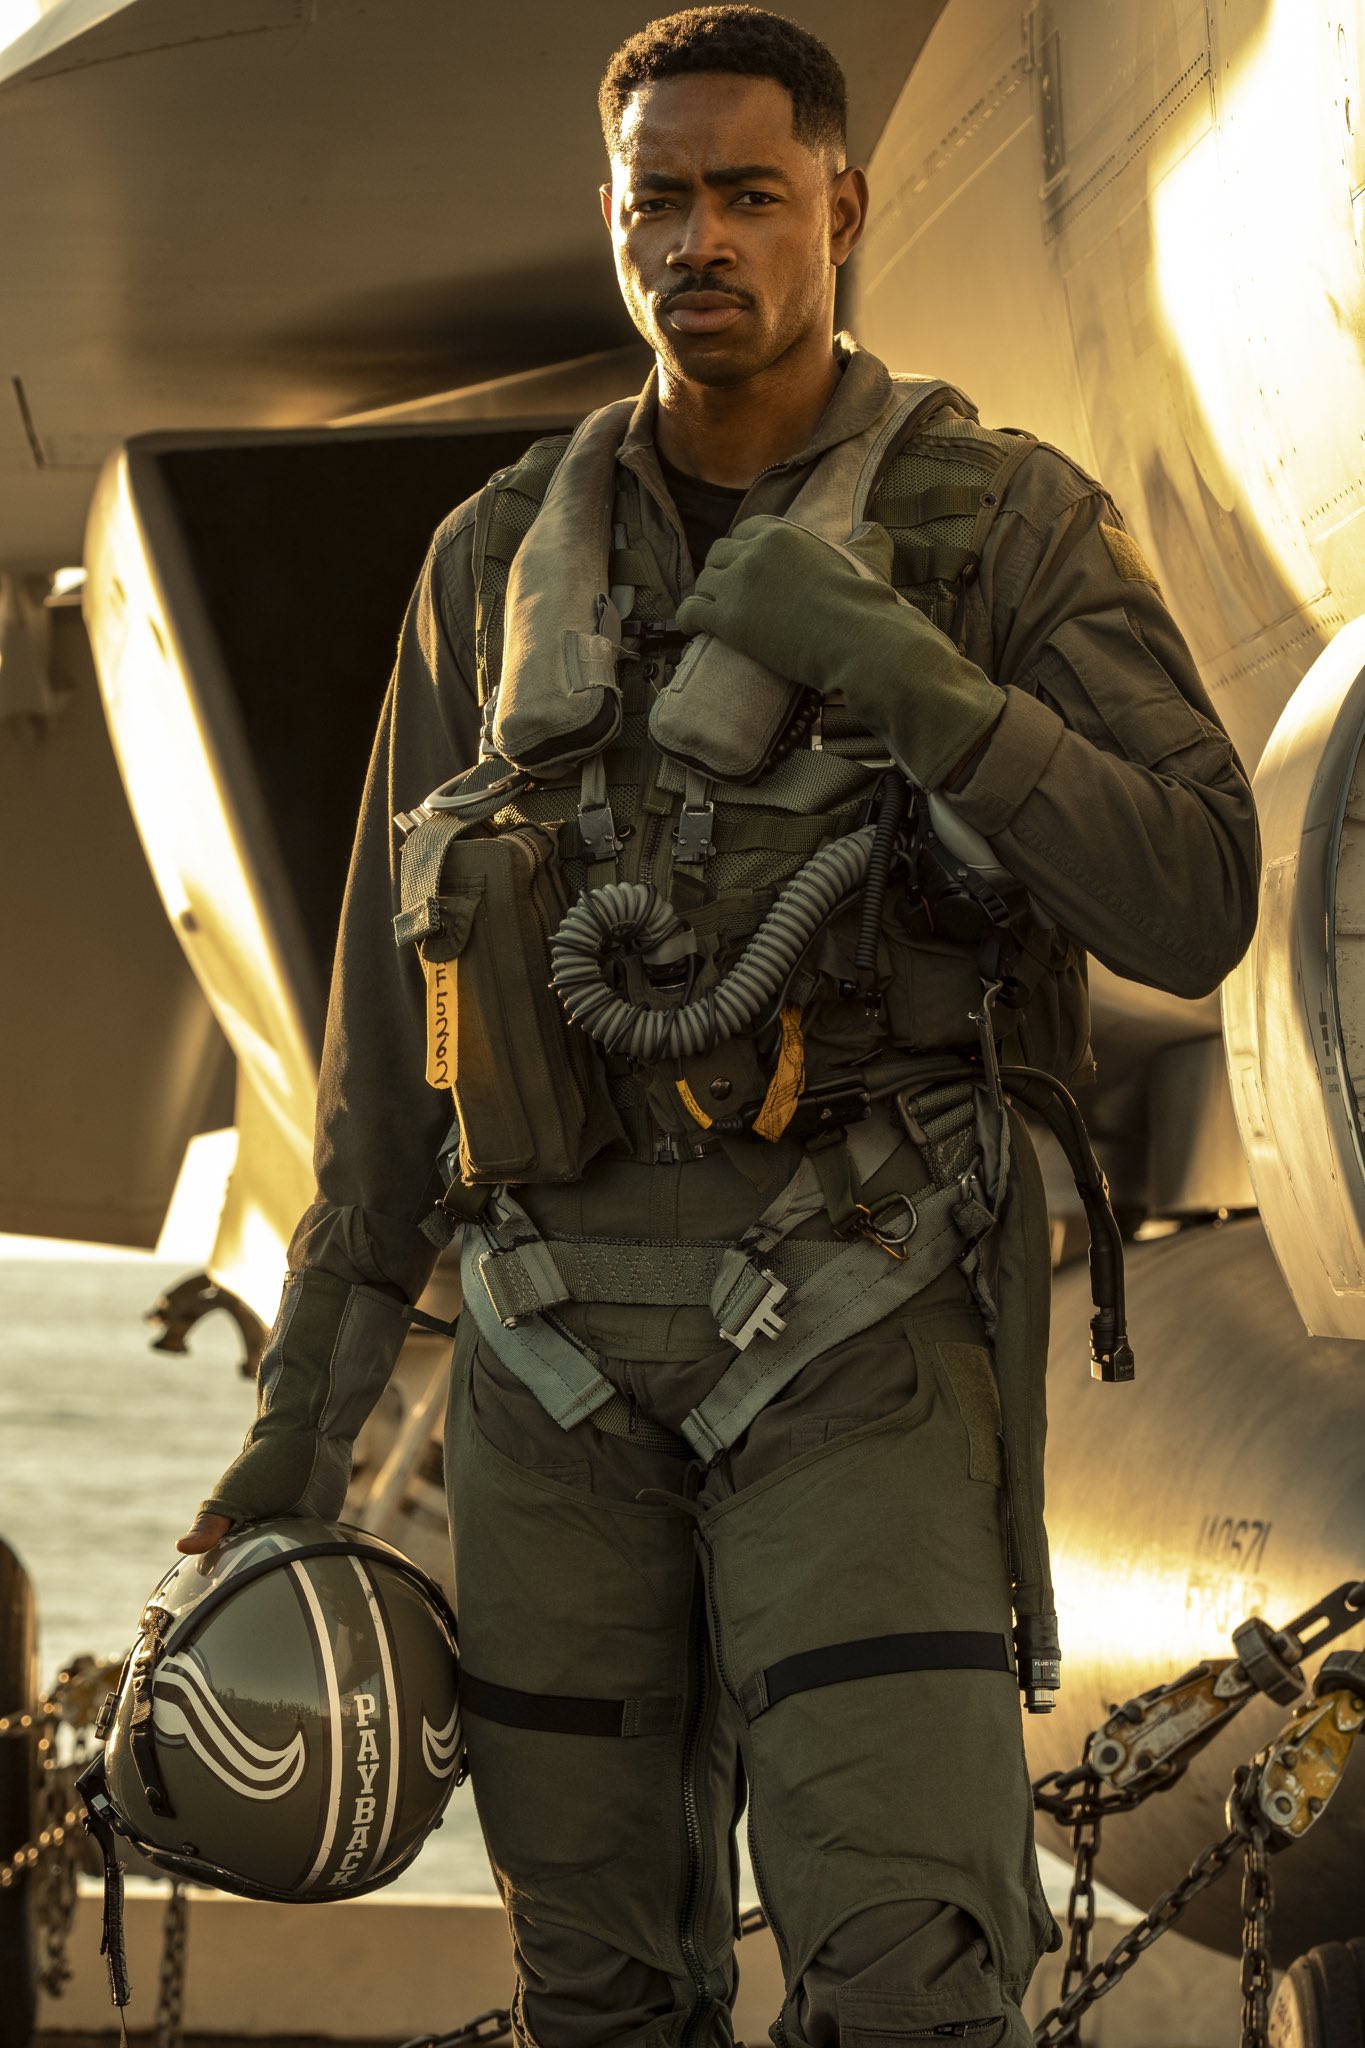 Tom Cruise returns in the triumphant 'Top Gun: Maverick' (Review)